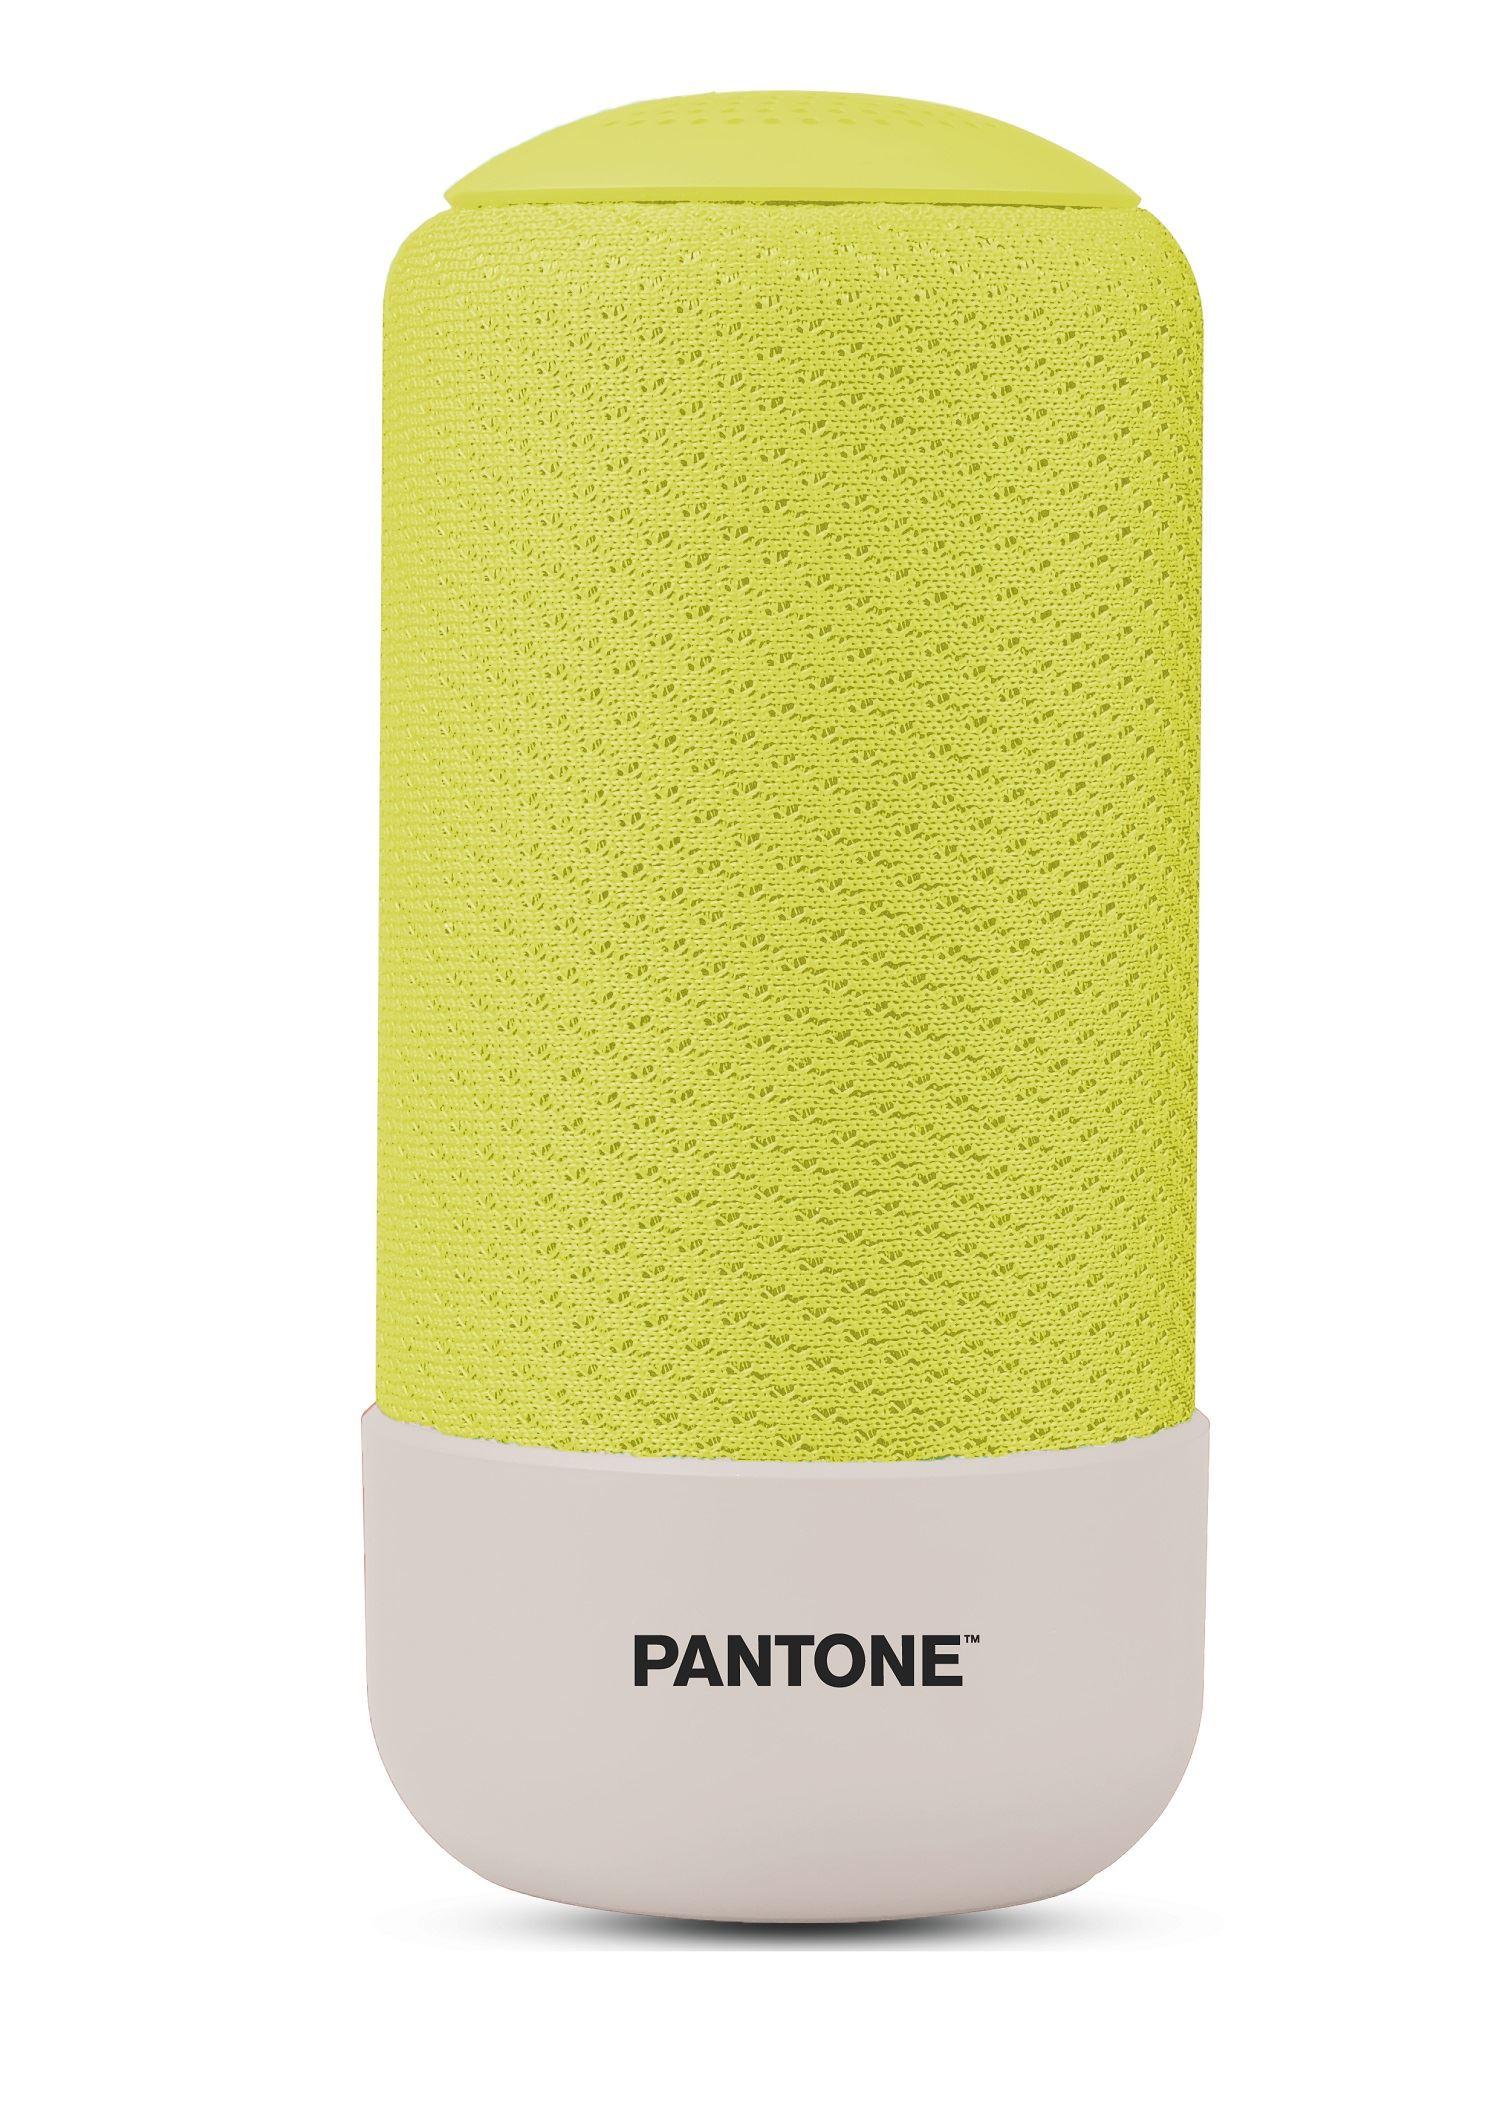 Selected image for PANTONE Bluetooth zvučnik žuti